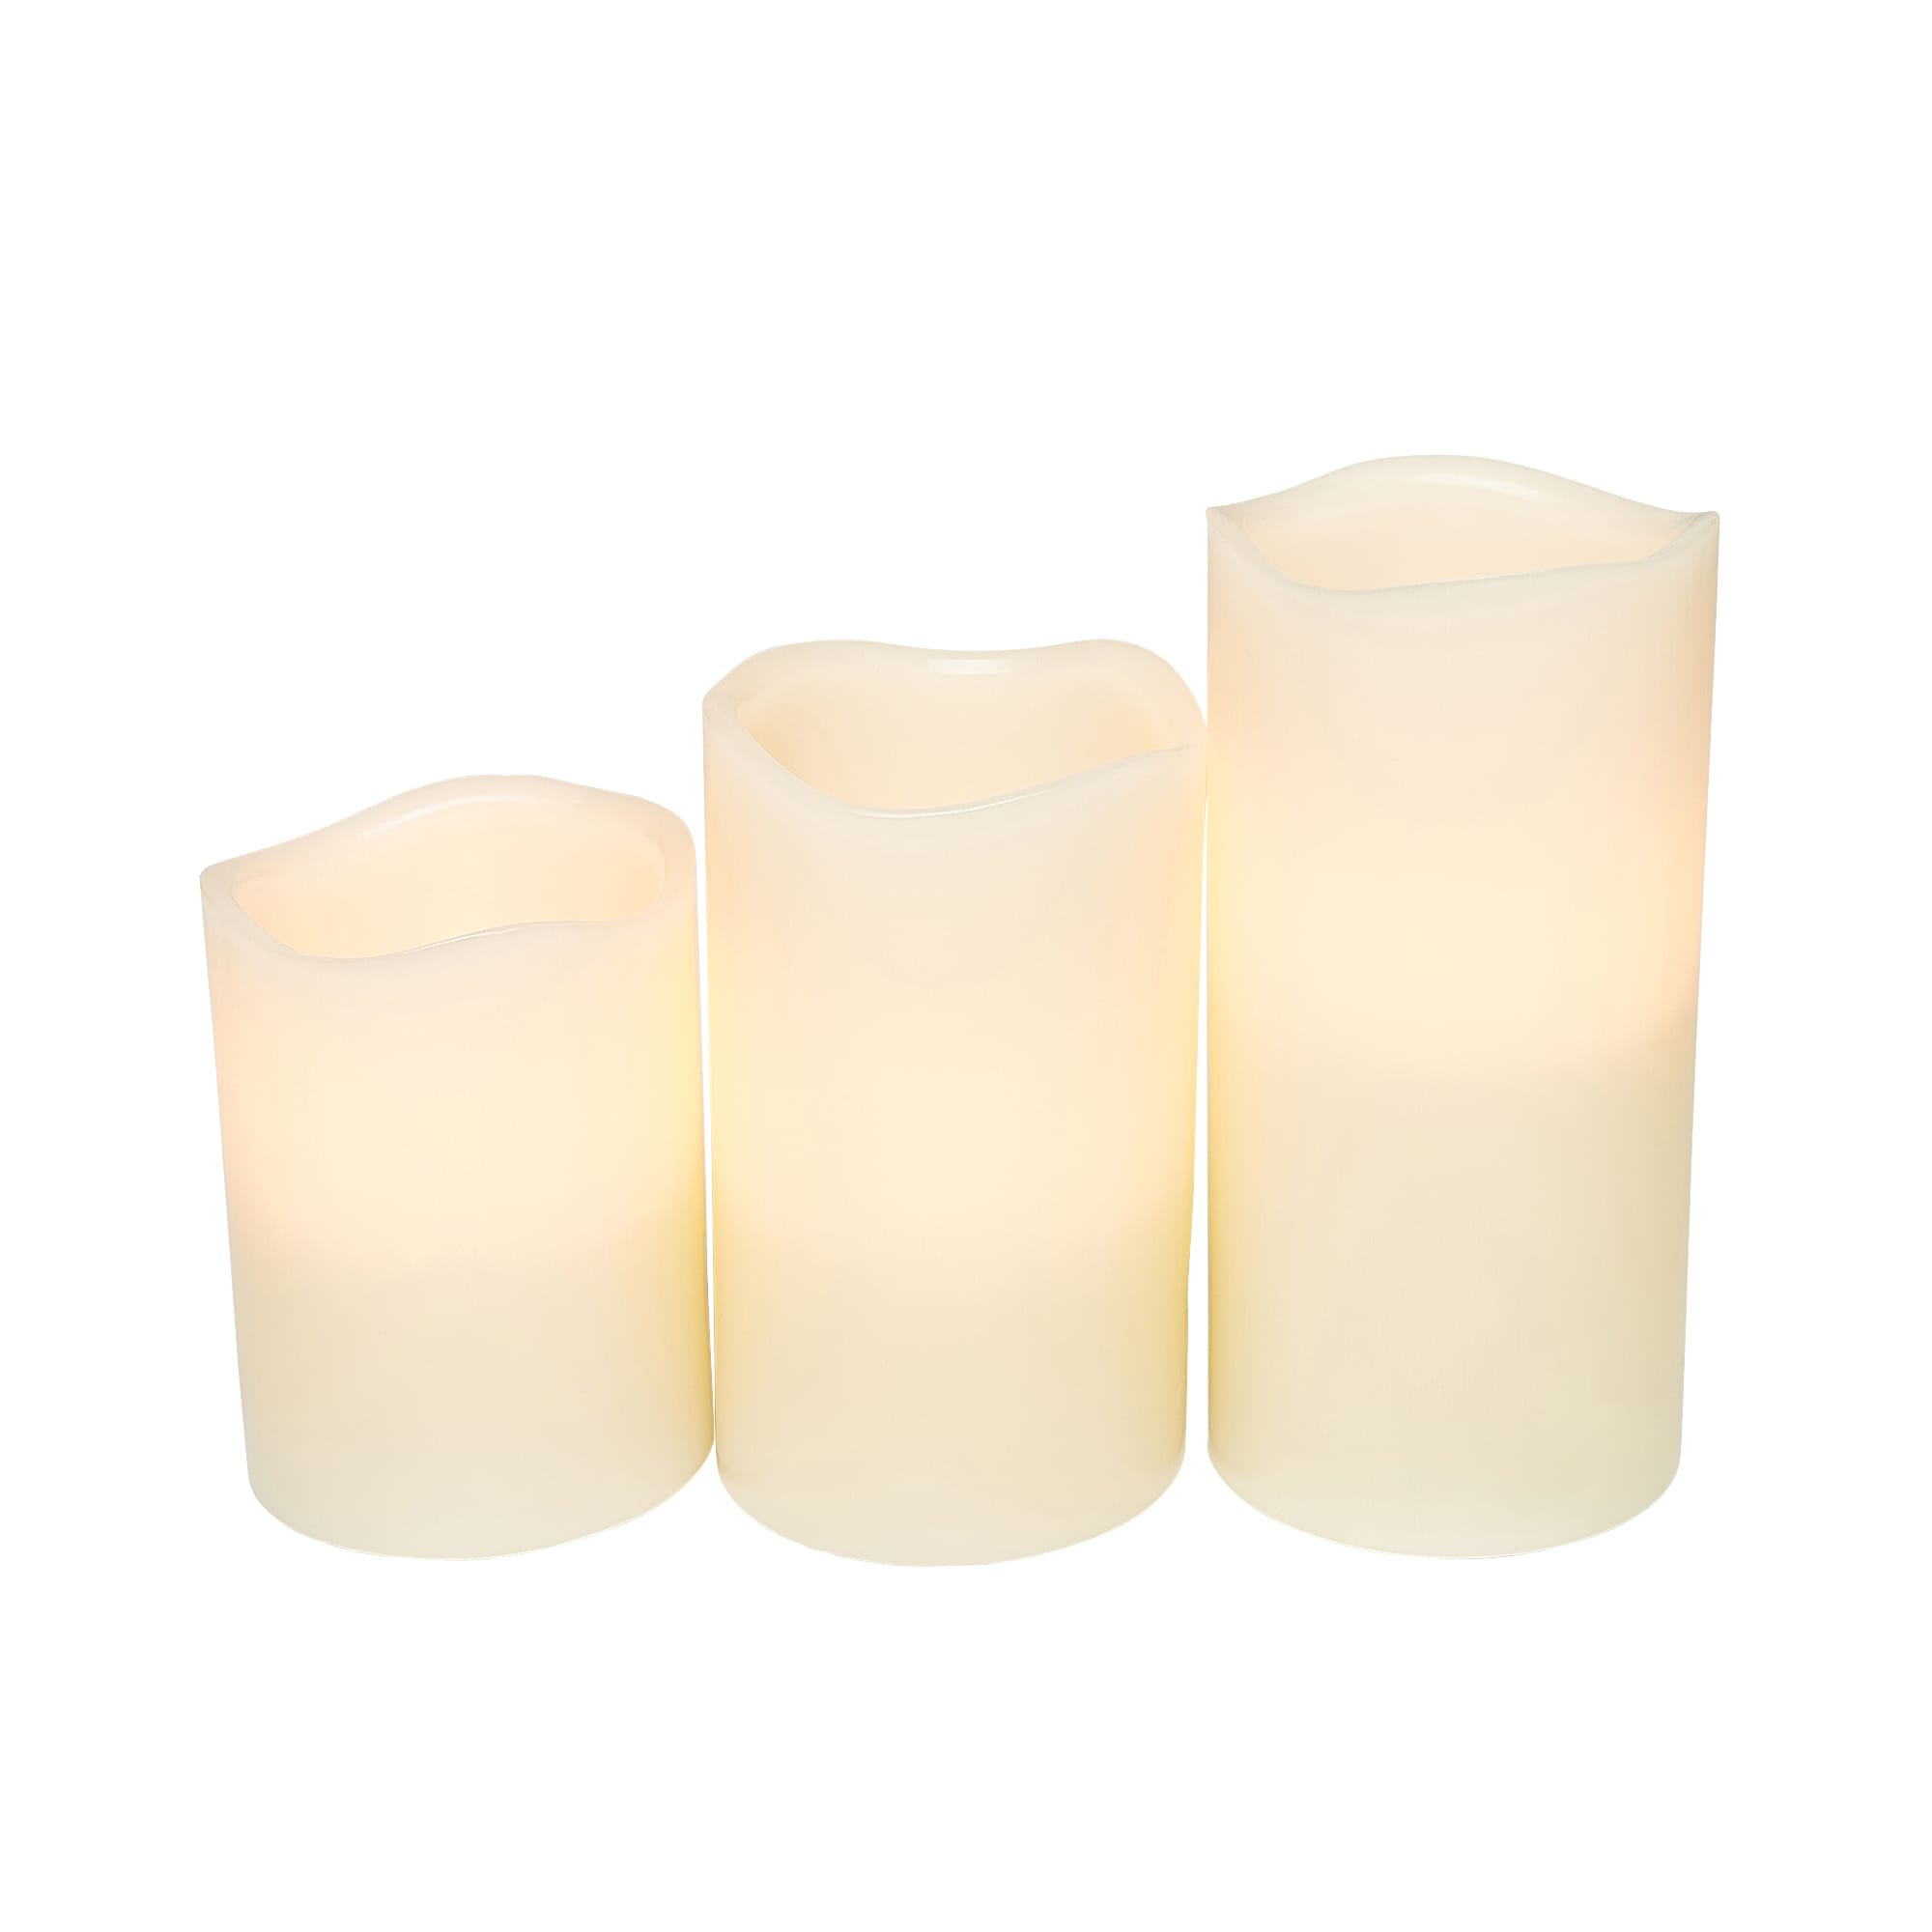 Wax Luminaries Candles (3 diameter by 6, 7, 8.5 Tall)